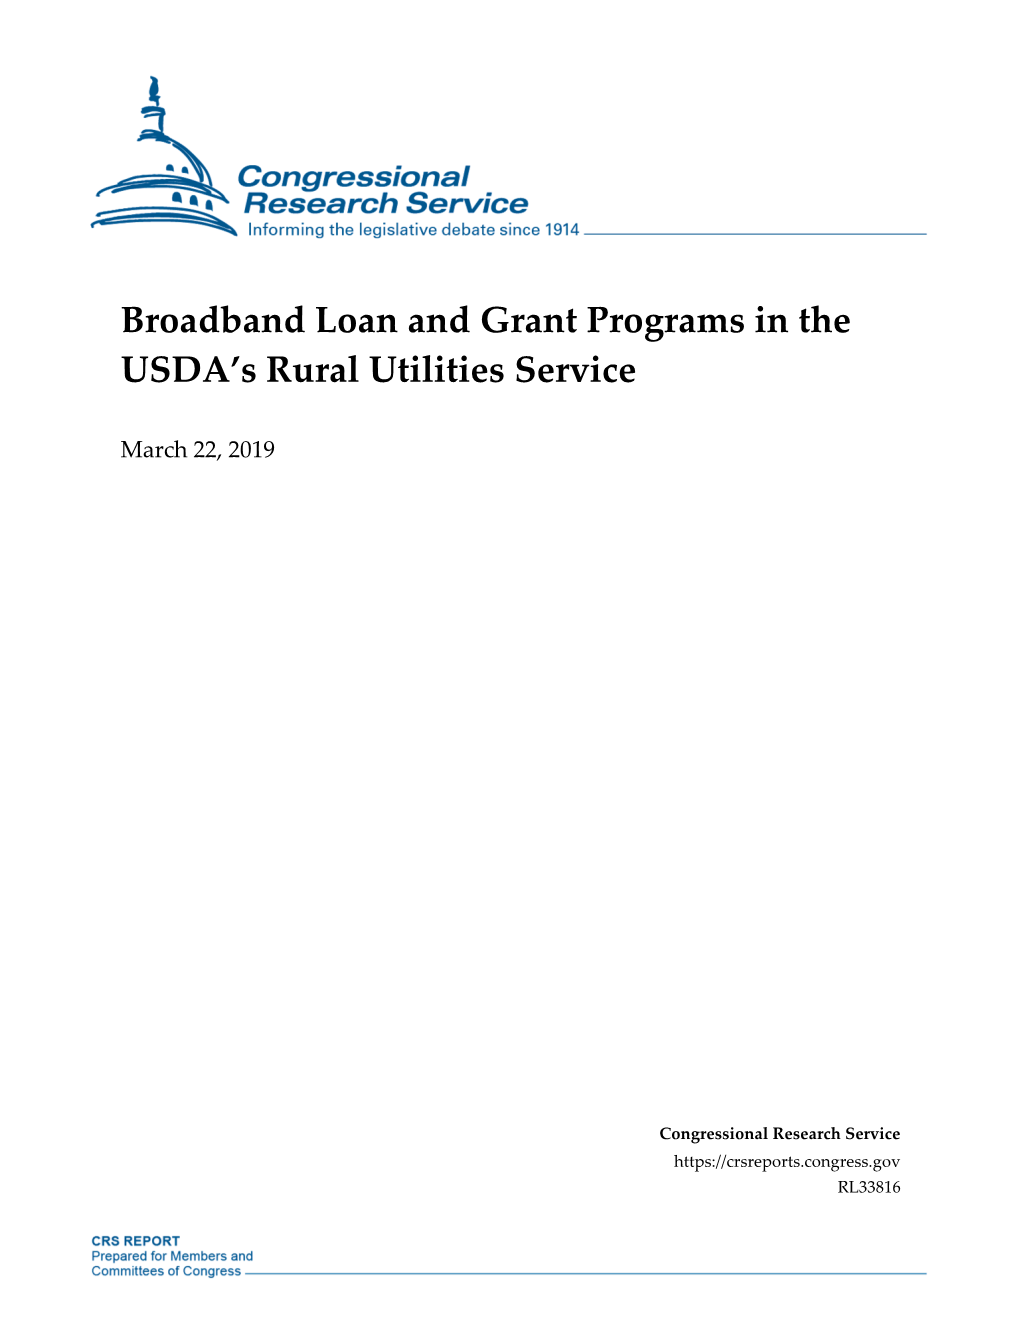 Broadband Loan and Grant Programs in the USDA's Rural